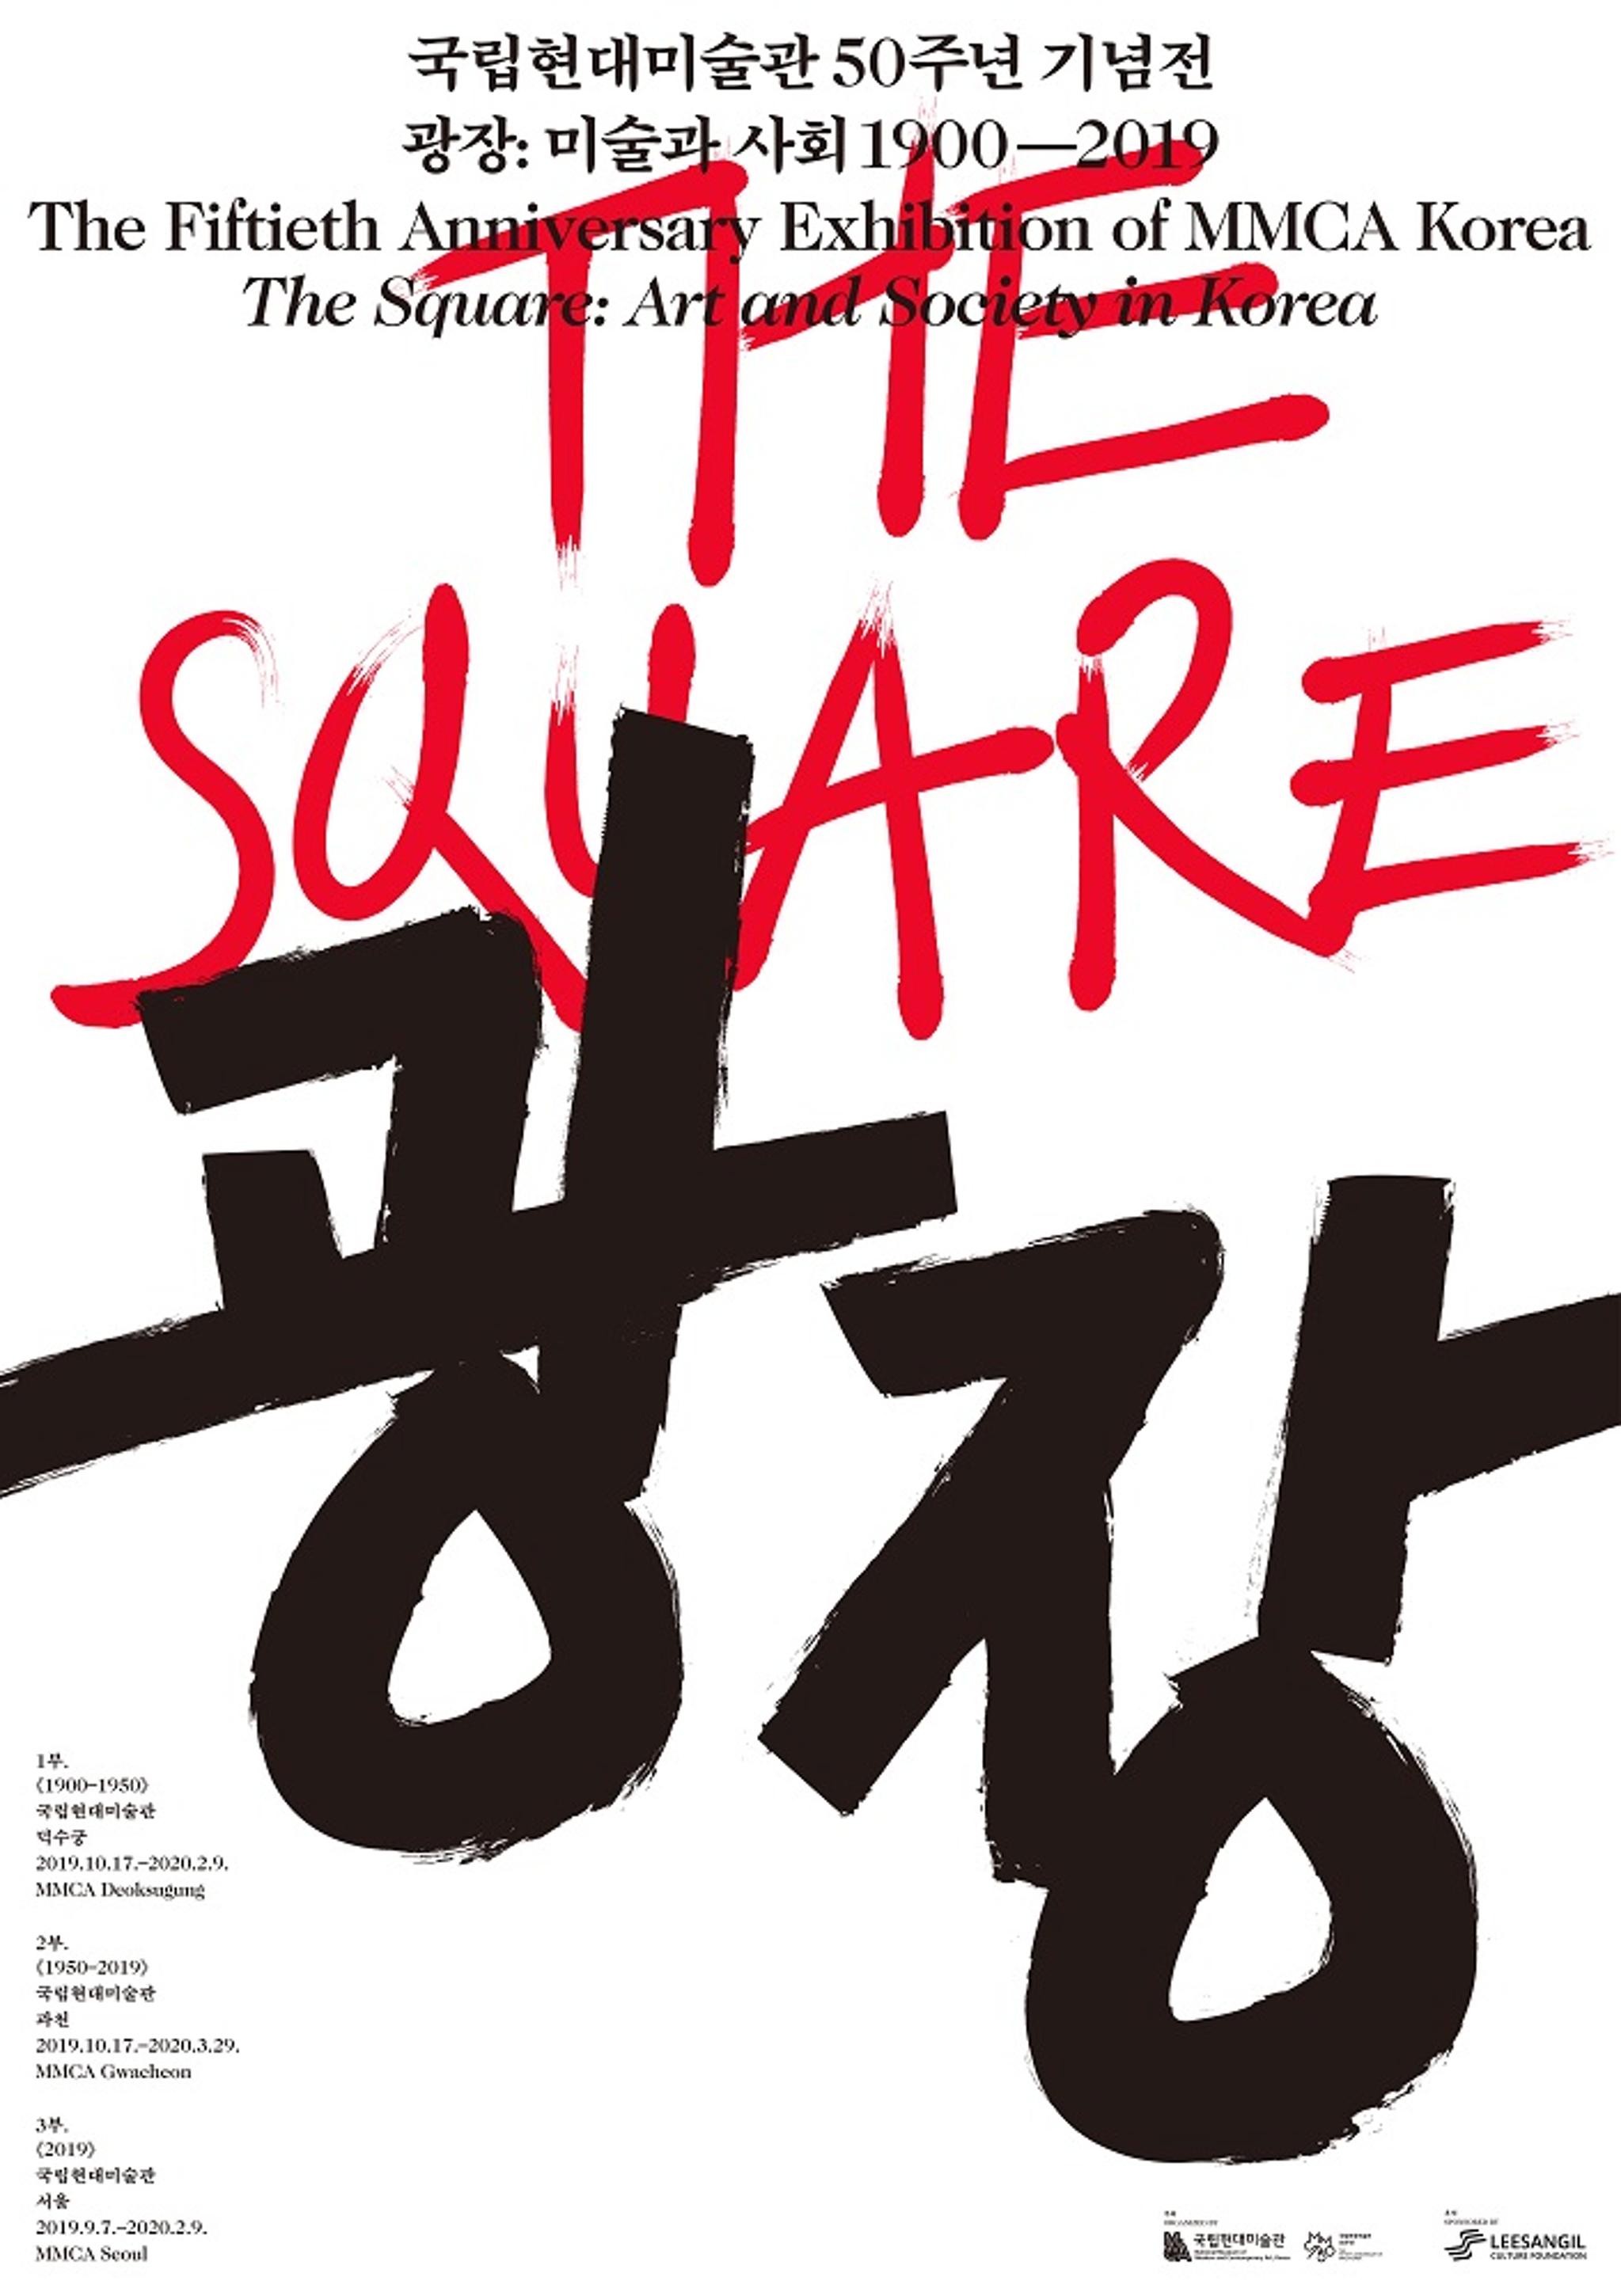 <p>국립현대미술관 50주년 기념전 <br>
		광장 : 미술과 사회 1900-2019 <br>
		The Fiftieth Anniversary Exhibition of MMCA Korea <br>
		The Square : Art and Society in Korea<br>
	</p>
	<p>THE SQUARE</p>
	<p>광장</p>
	<ul>
		<li>
			<ul>
				<li>1부.</li>
				<li>《1900-1950》</li>
				<li>국립현대미술관</li>
				<li>덕수궁</li>
				<li>2019.10.17-2020.2.9</li>
				<li>MMCA Deoksugung</li>
			</ul>
		</li>
		<li>
			<ul>
				<li>2부.</li>
				<li>《1950-2019》</li>
				<li>국립현대미술관</li>
				<li>과천</li>
				<li>2019.10.17-2020.3.29</li>
				<li>MMCA Gwacheon</li>
			</ul>
		</li>
		<li>
			<ul>
				<li>3부.</li>
				<li>《2019》</li>
				<li>국립현대미술관</li>
				<li>서울</li>
				<li>2019.9.7-2020.2.9</li>
				<li>MMCA Seoul</li>
			</ul>
		</li>
	</ul>